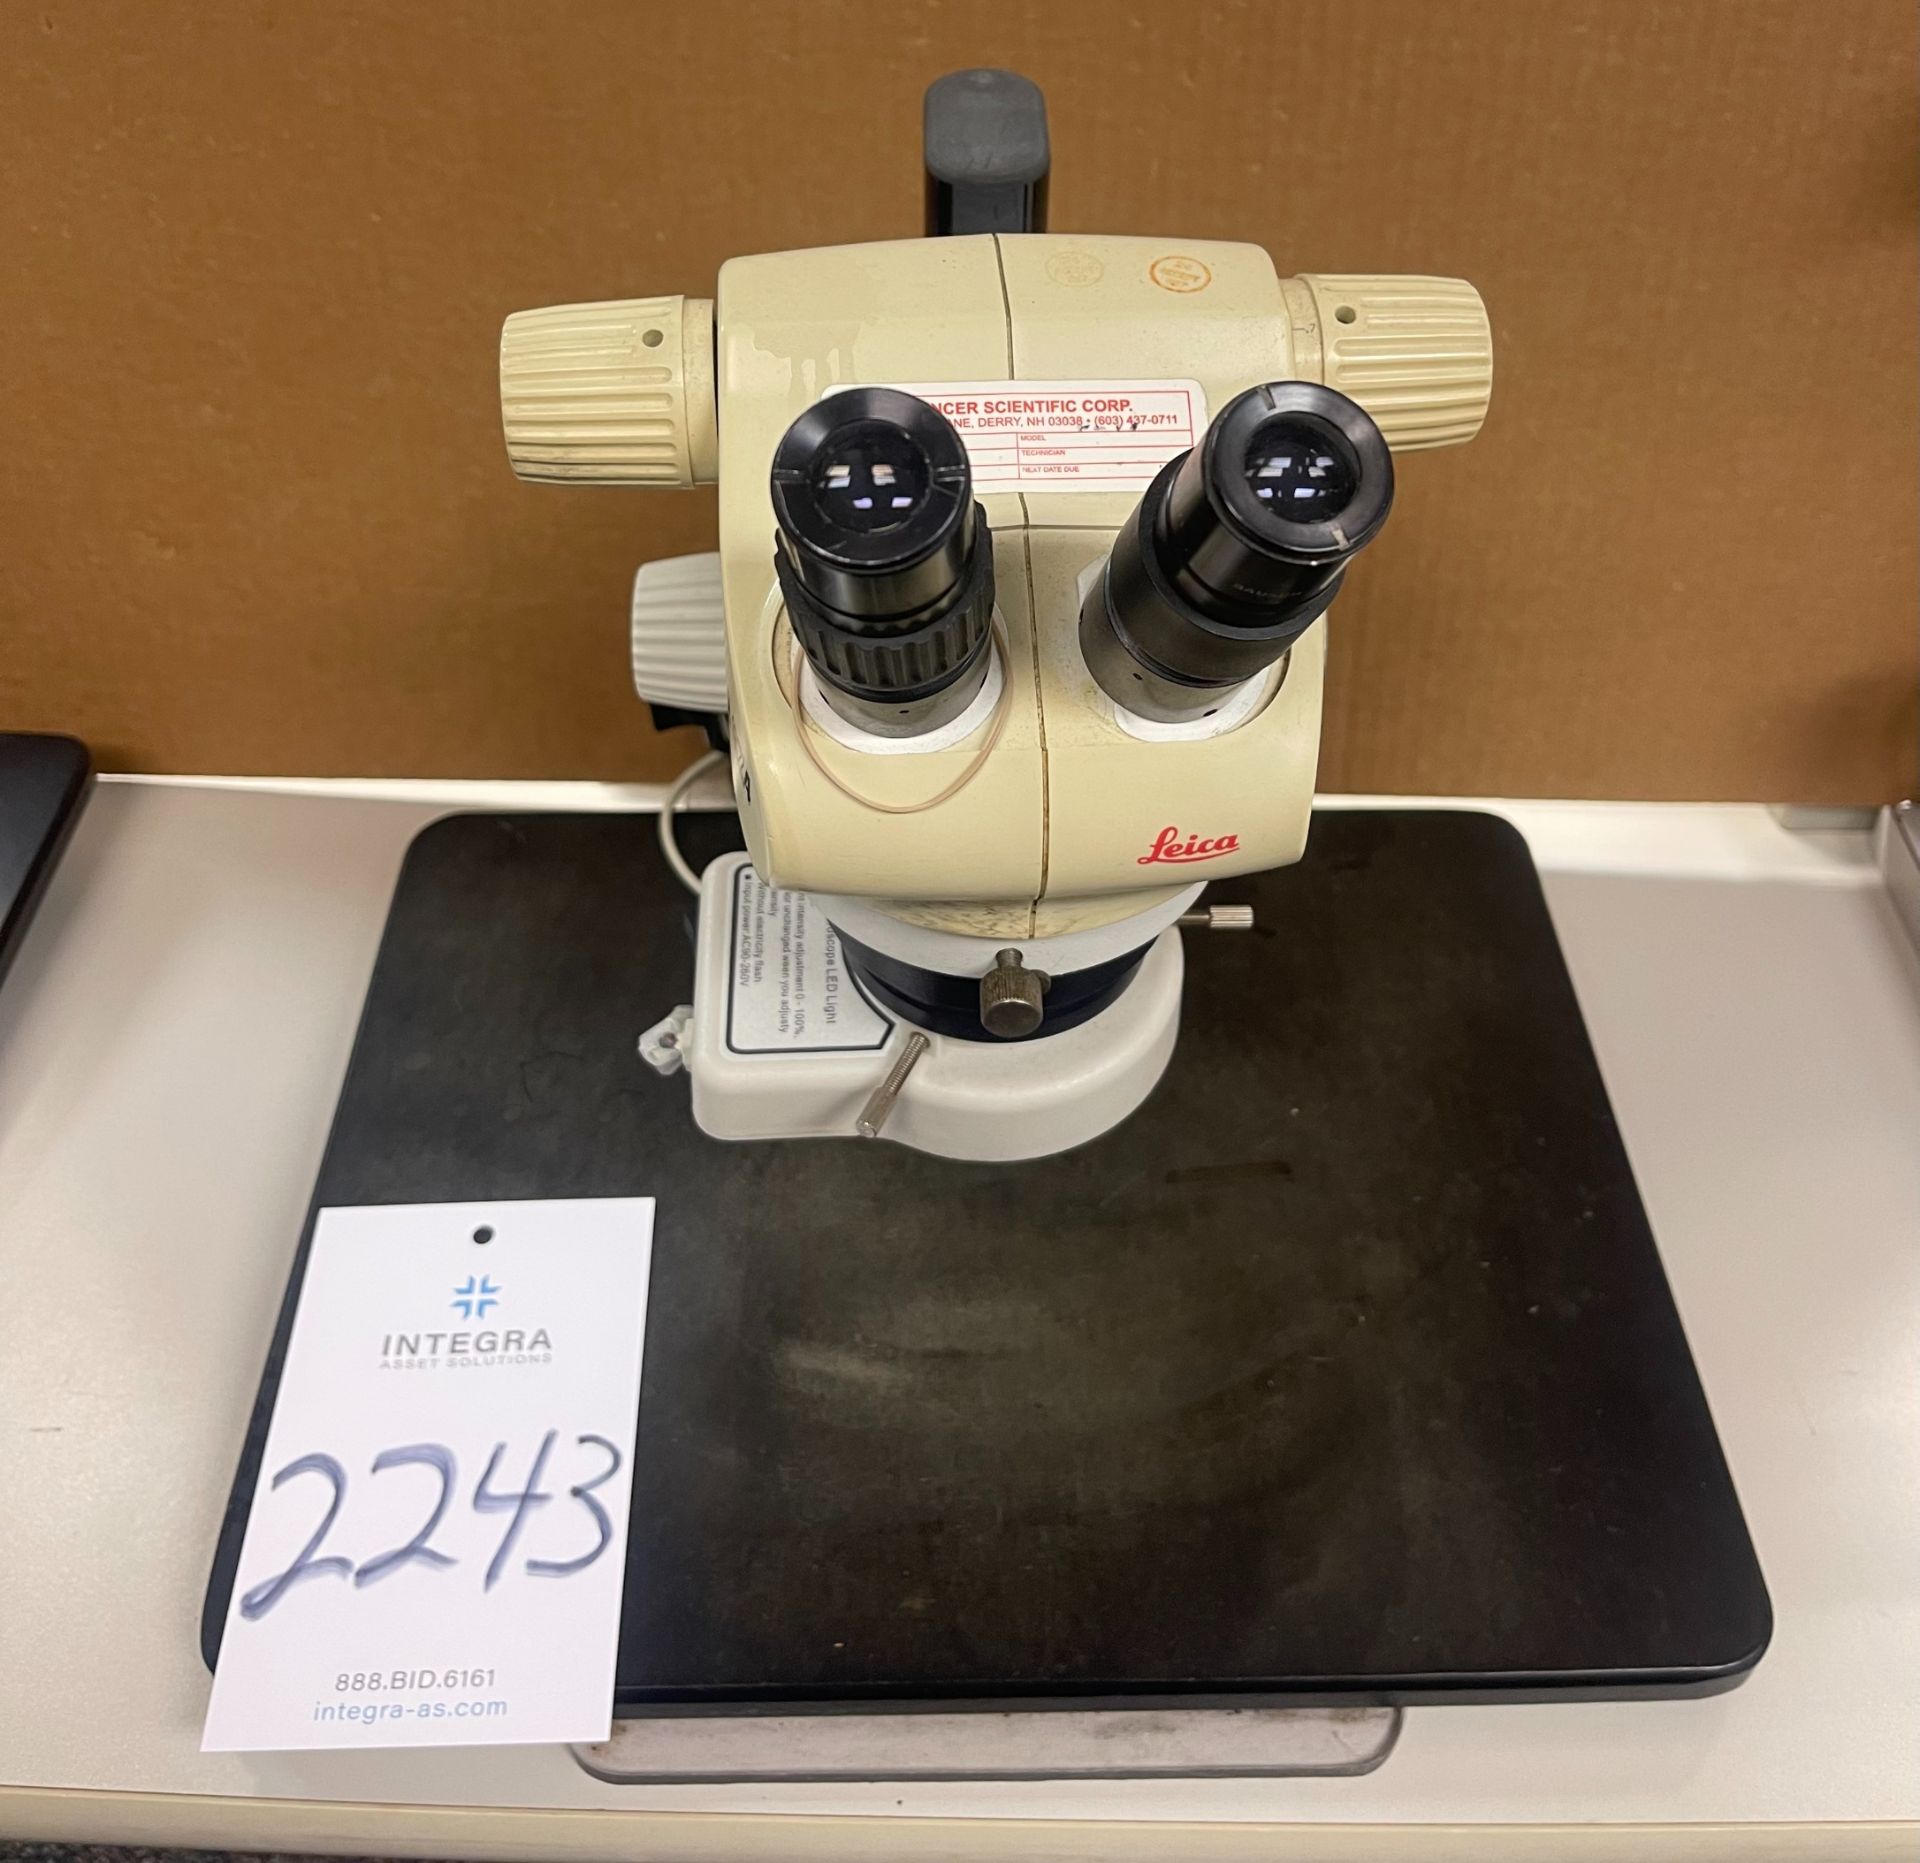 Leica GZ4 Stereo Microscope